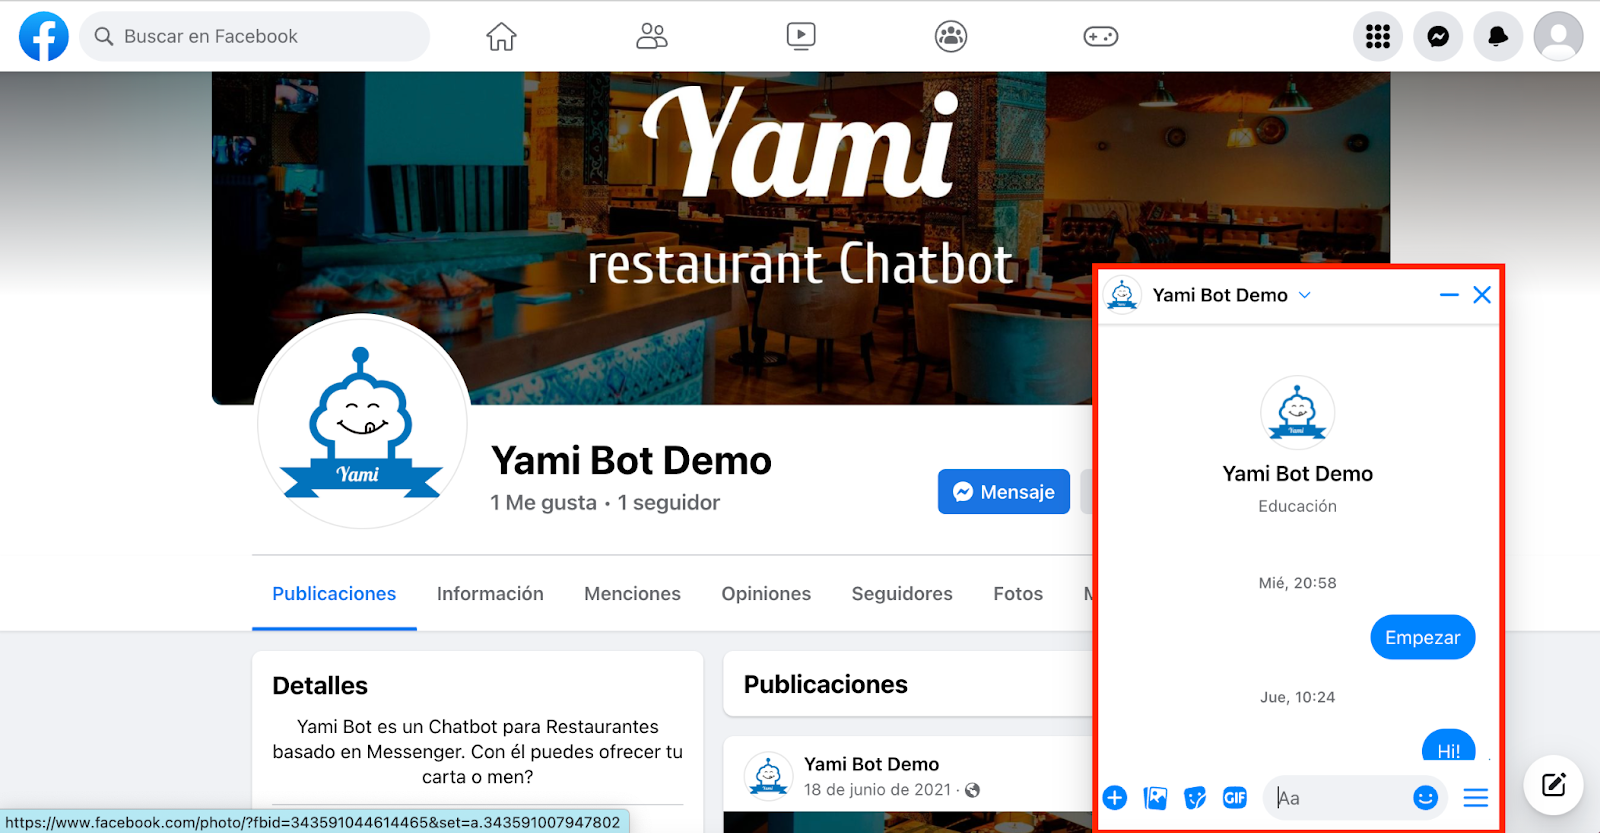 Yami Bot es el perfect ejemplo de聊天机器人para Facebook Messenger